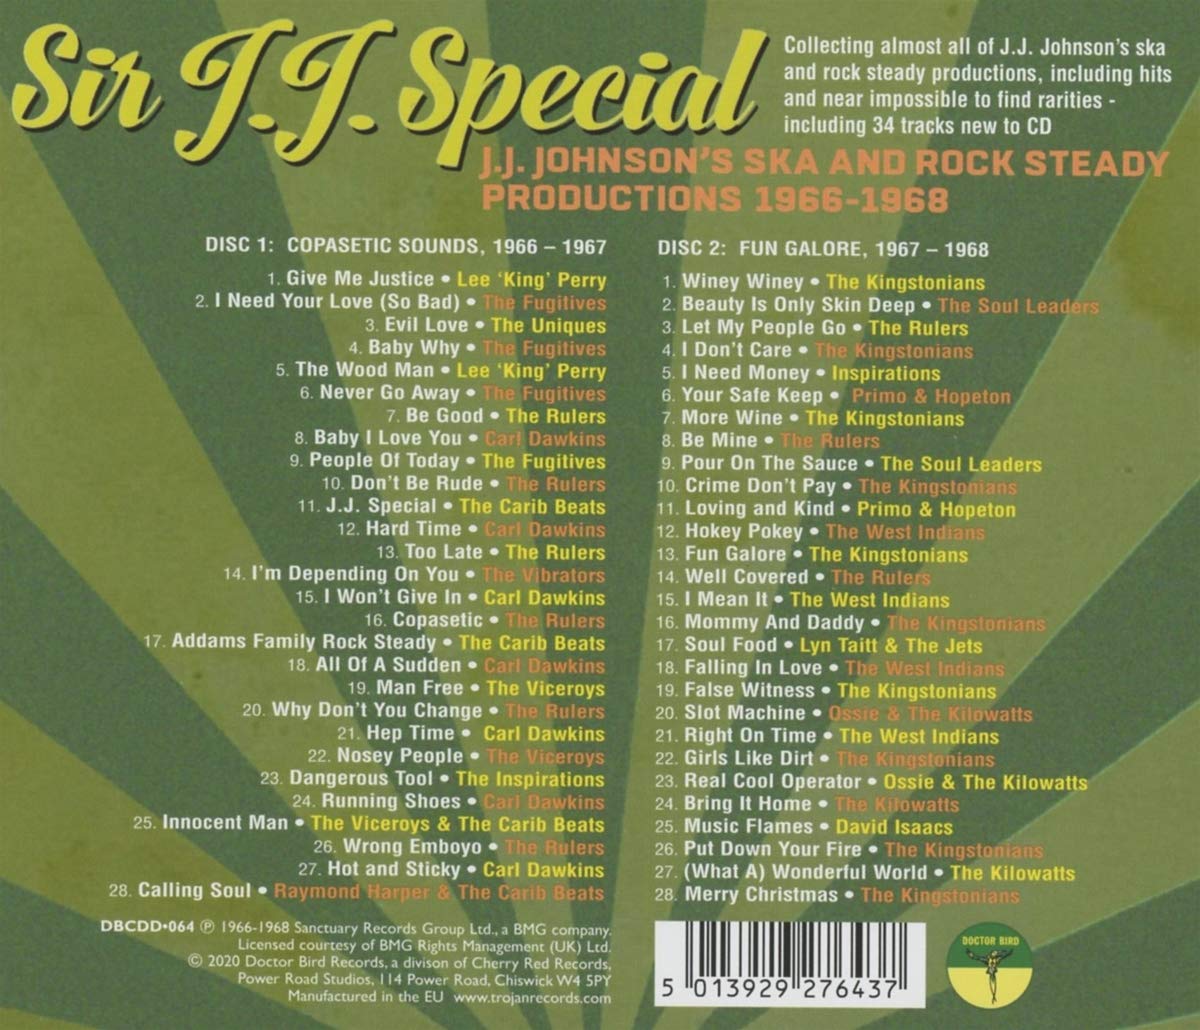 J.J.존슨 음악 컴필레이션 (Sir J.J. Special - J.J. Johnson's Ska And Rock Steady Productions 1966-1968)